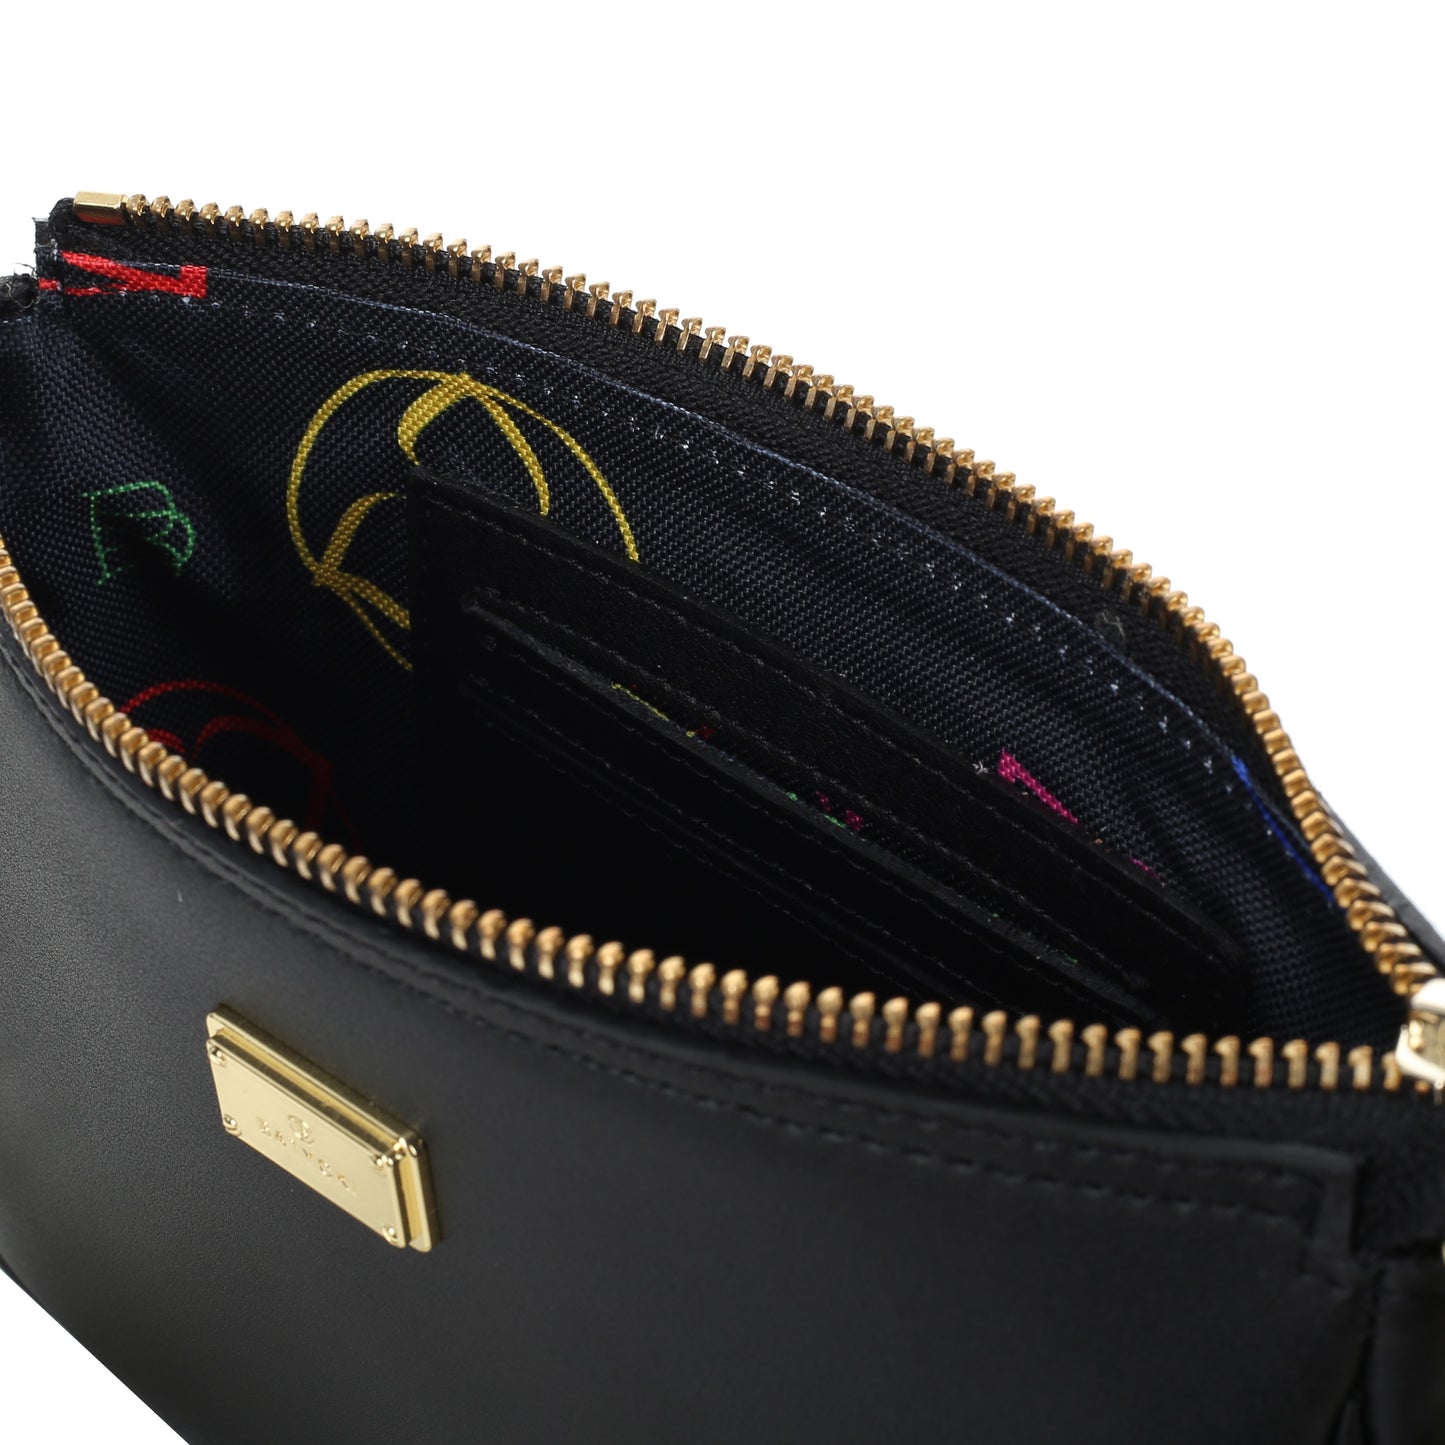 HARLEY BLACK leather women's handbag